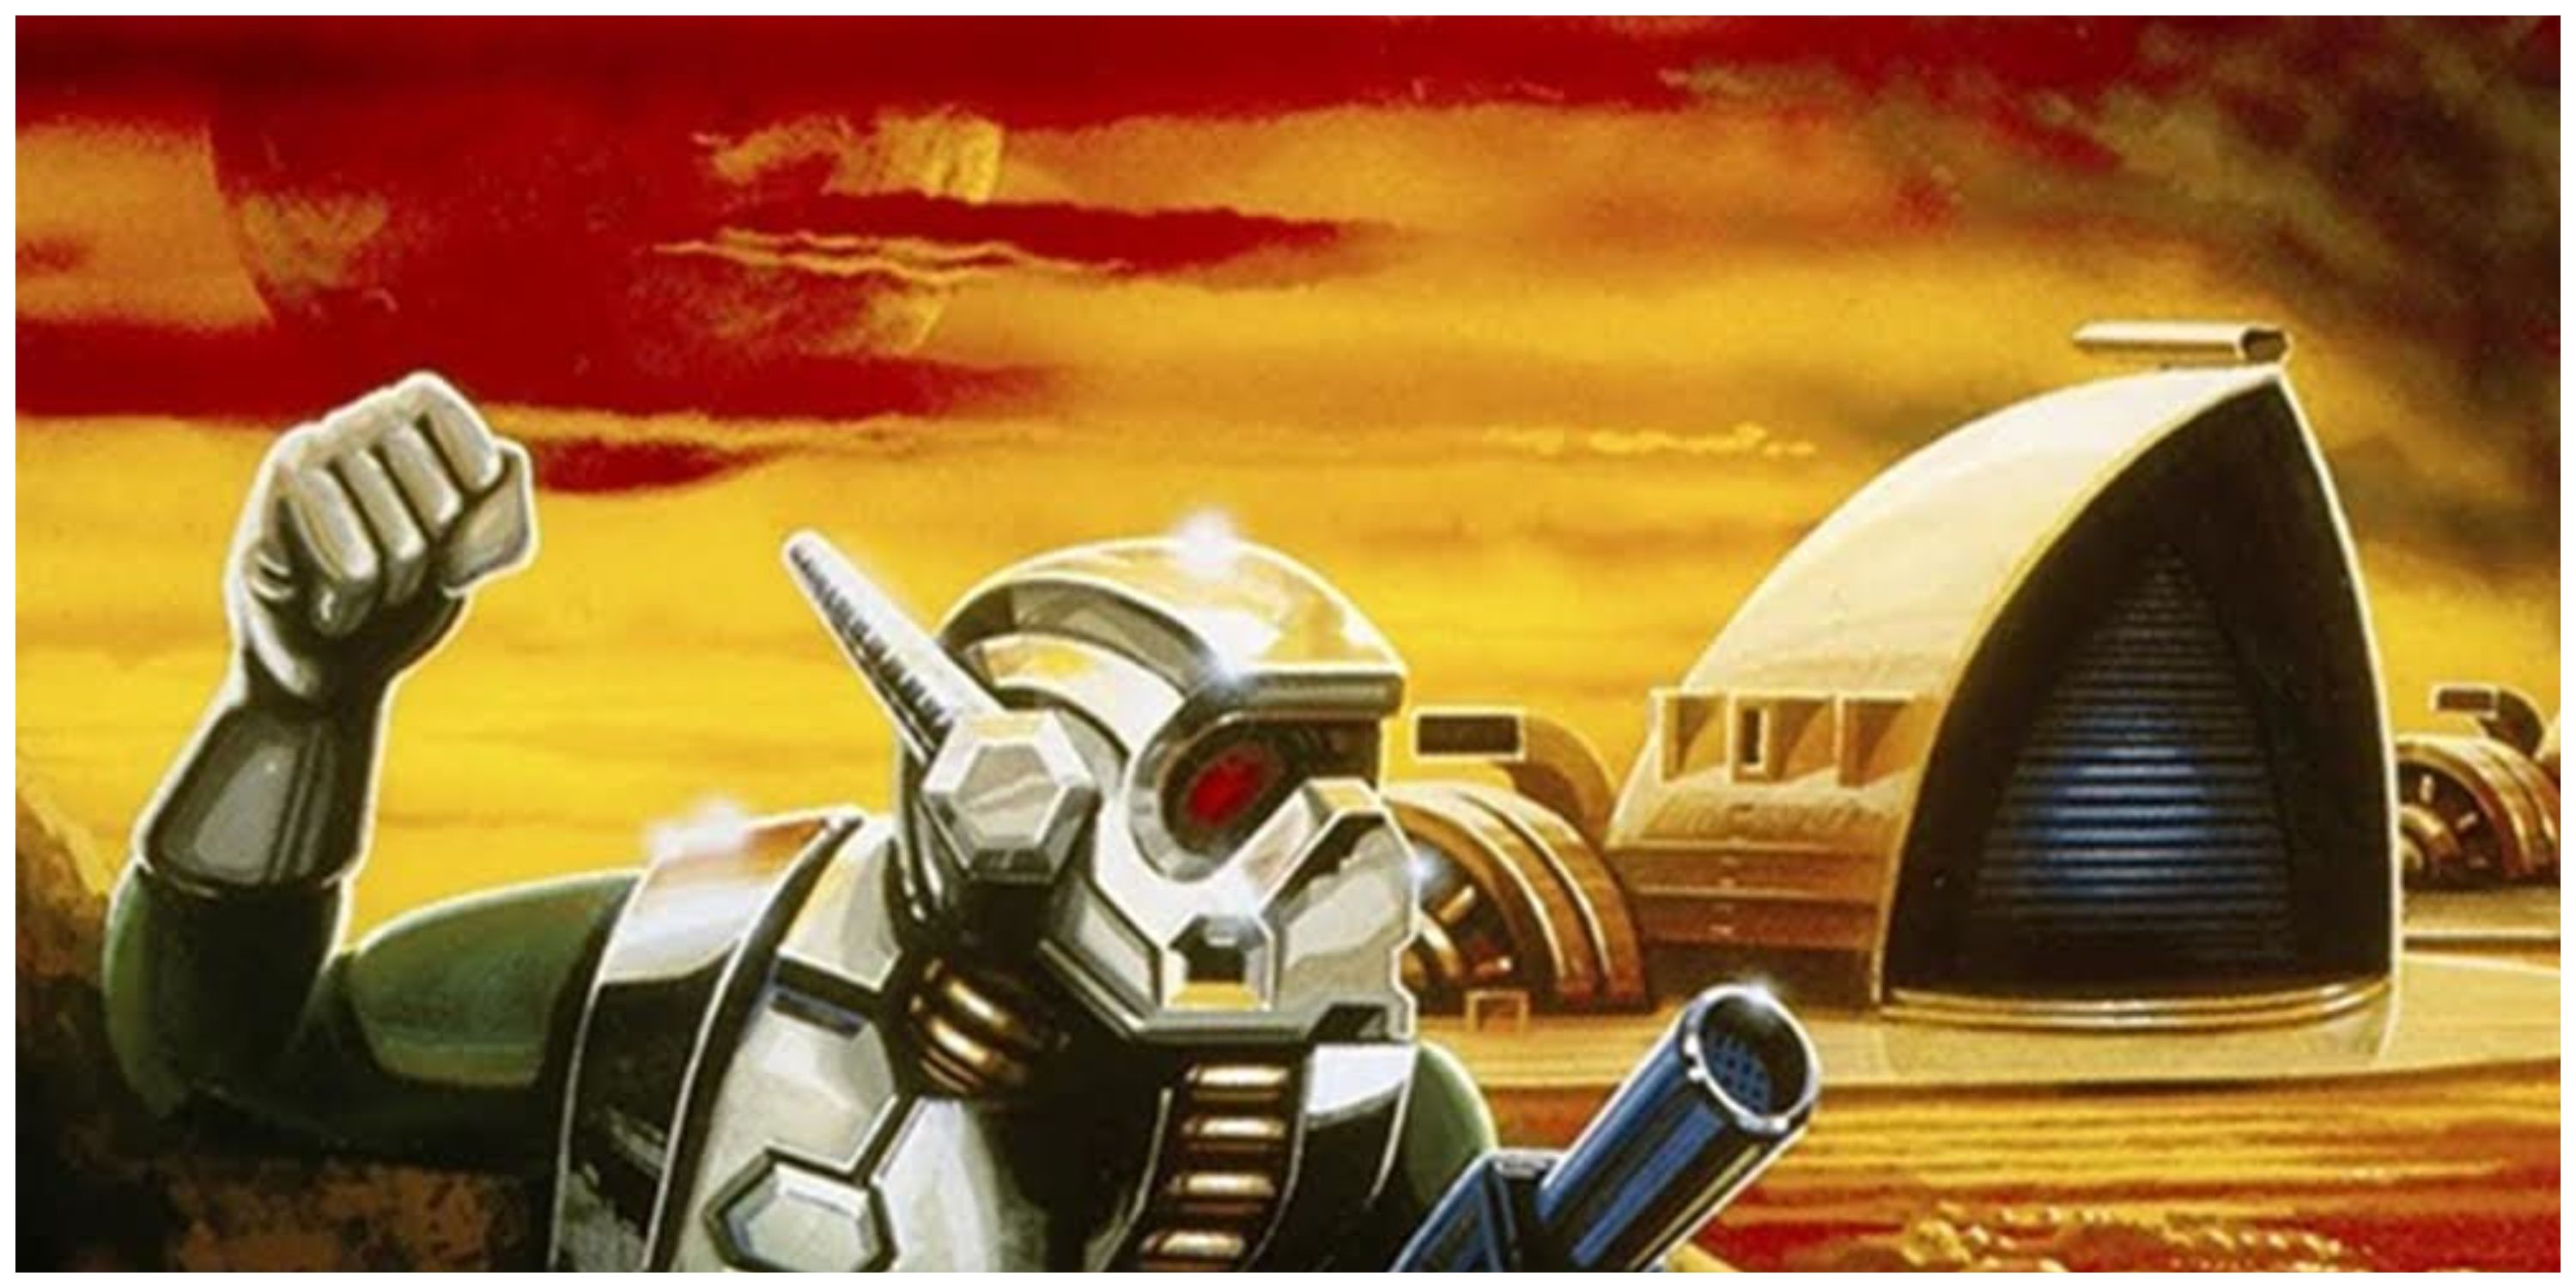 Dune 2 (game) cover art